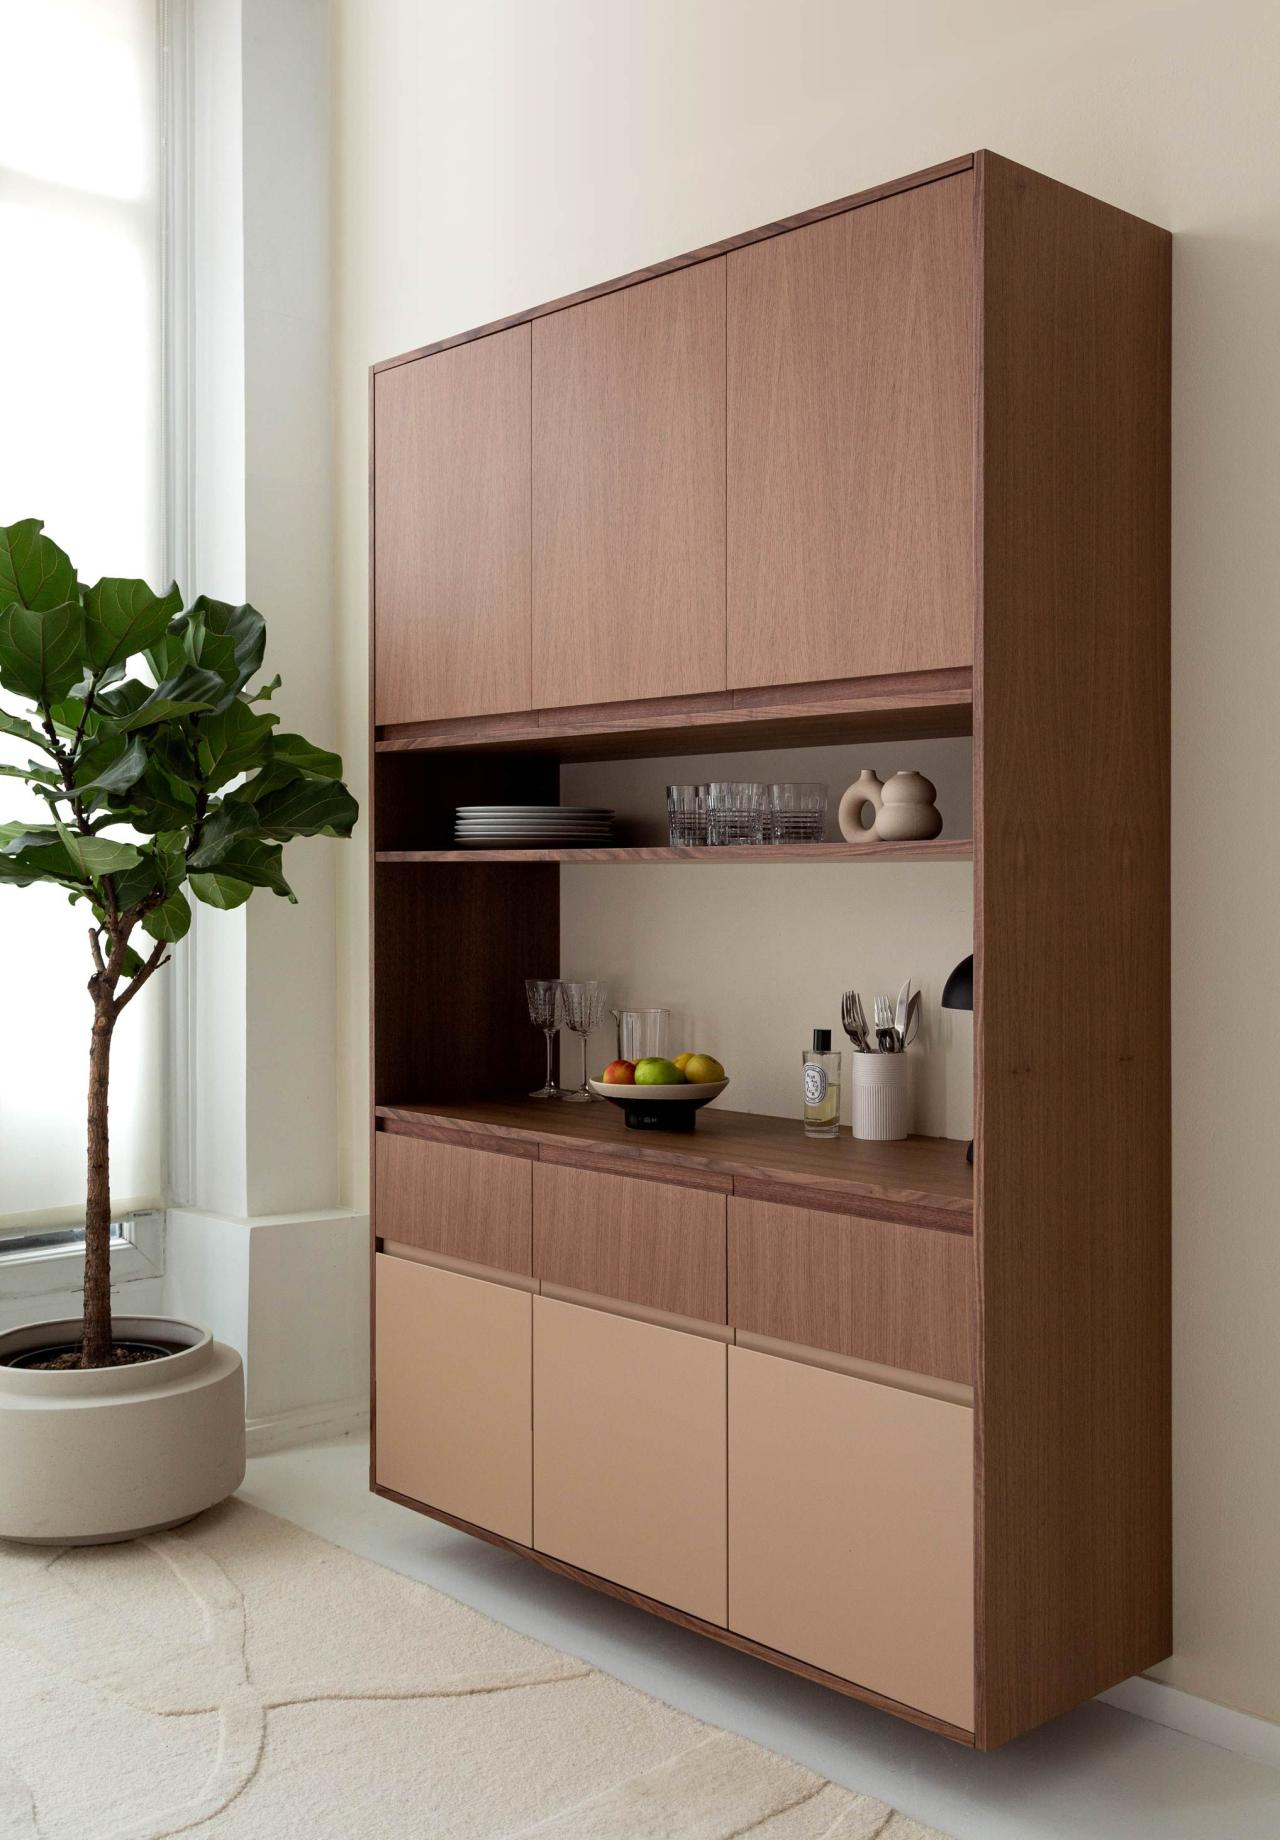 A china cupboard in natural walnut and moka